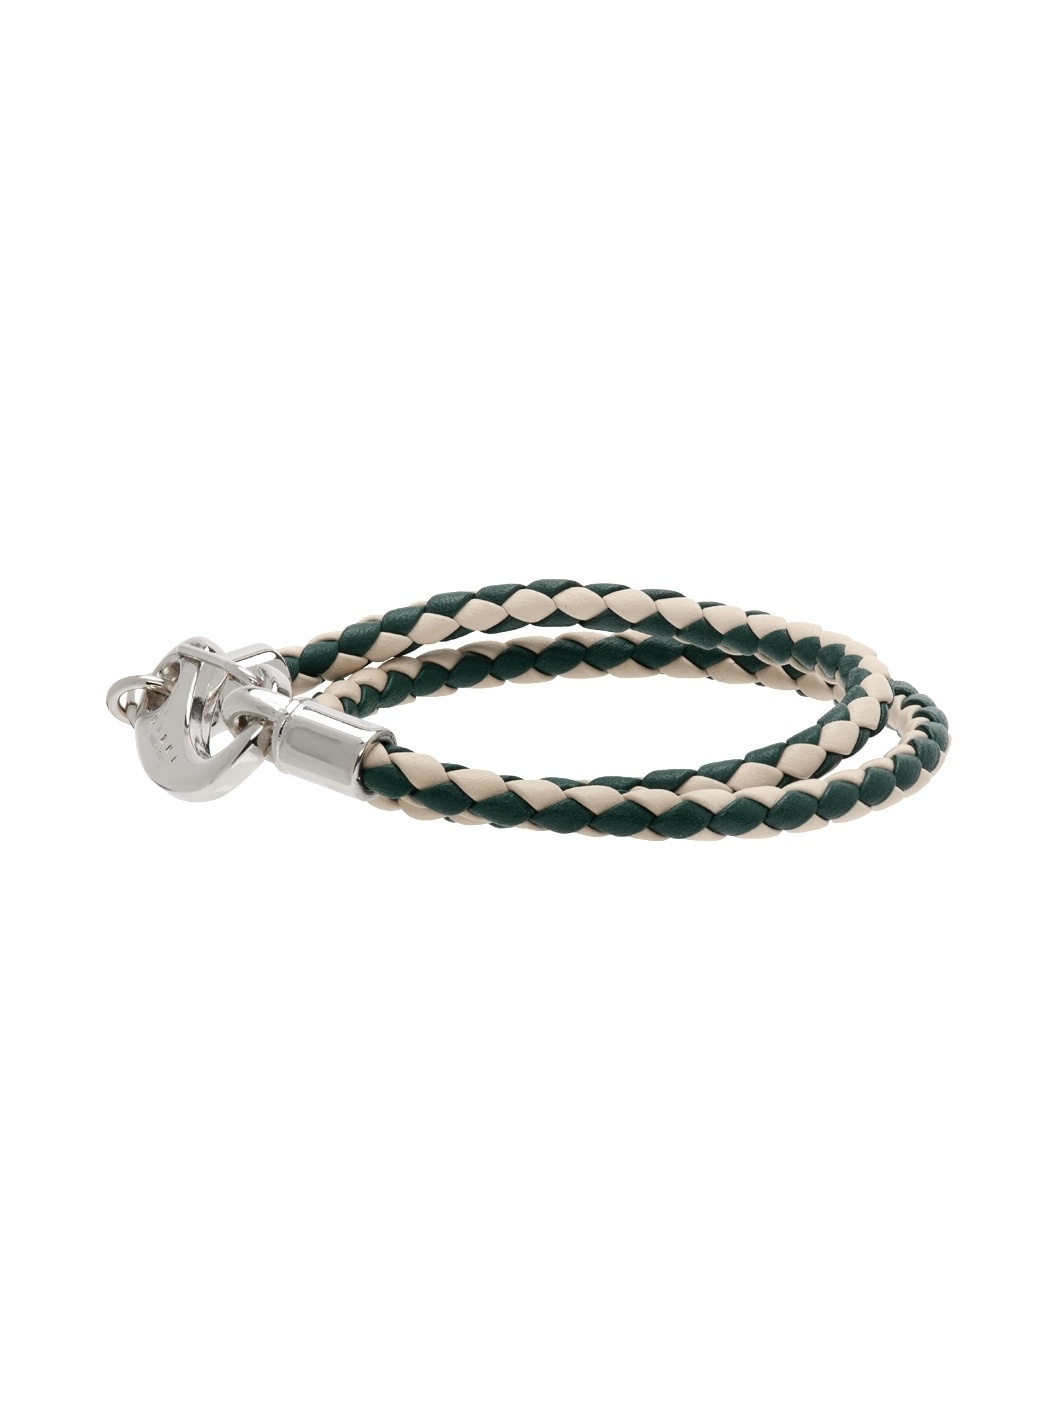 White & Green Double Wrap Braided Bracelet - 3